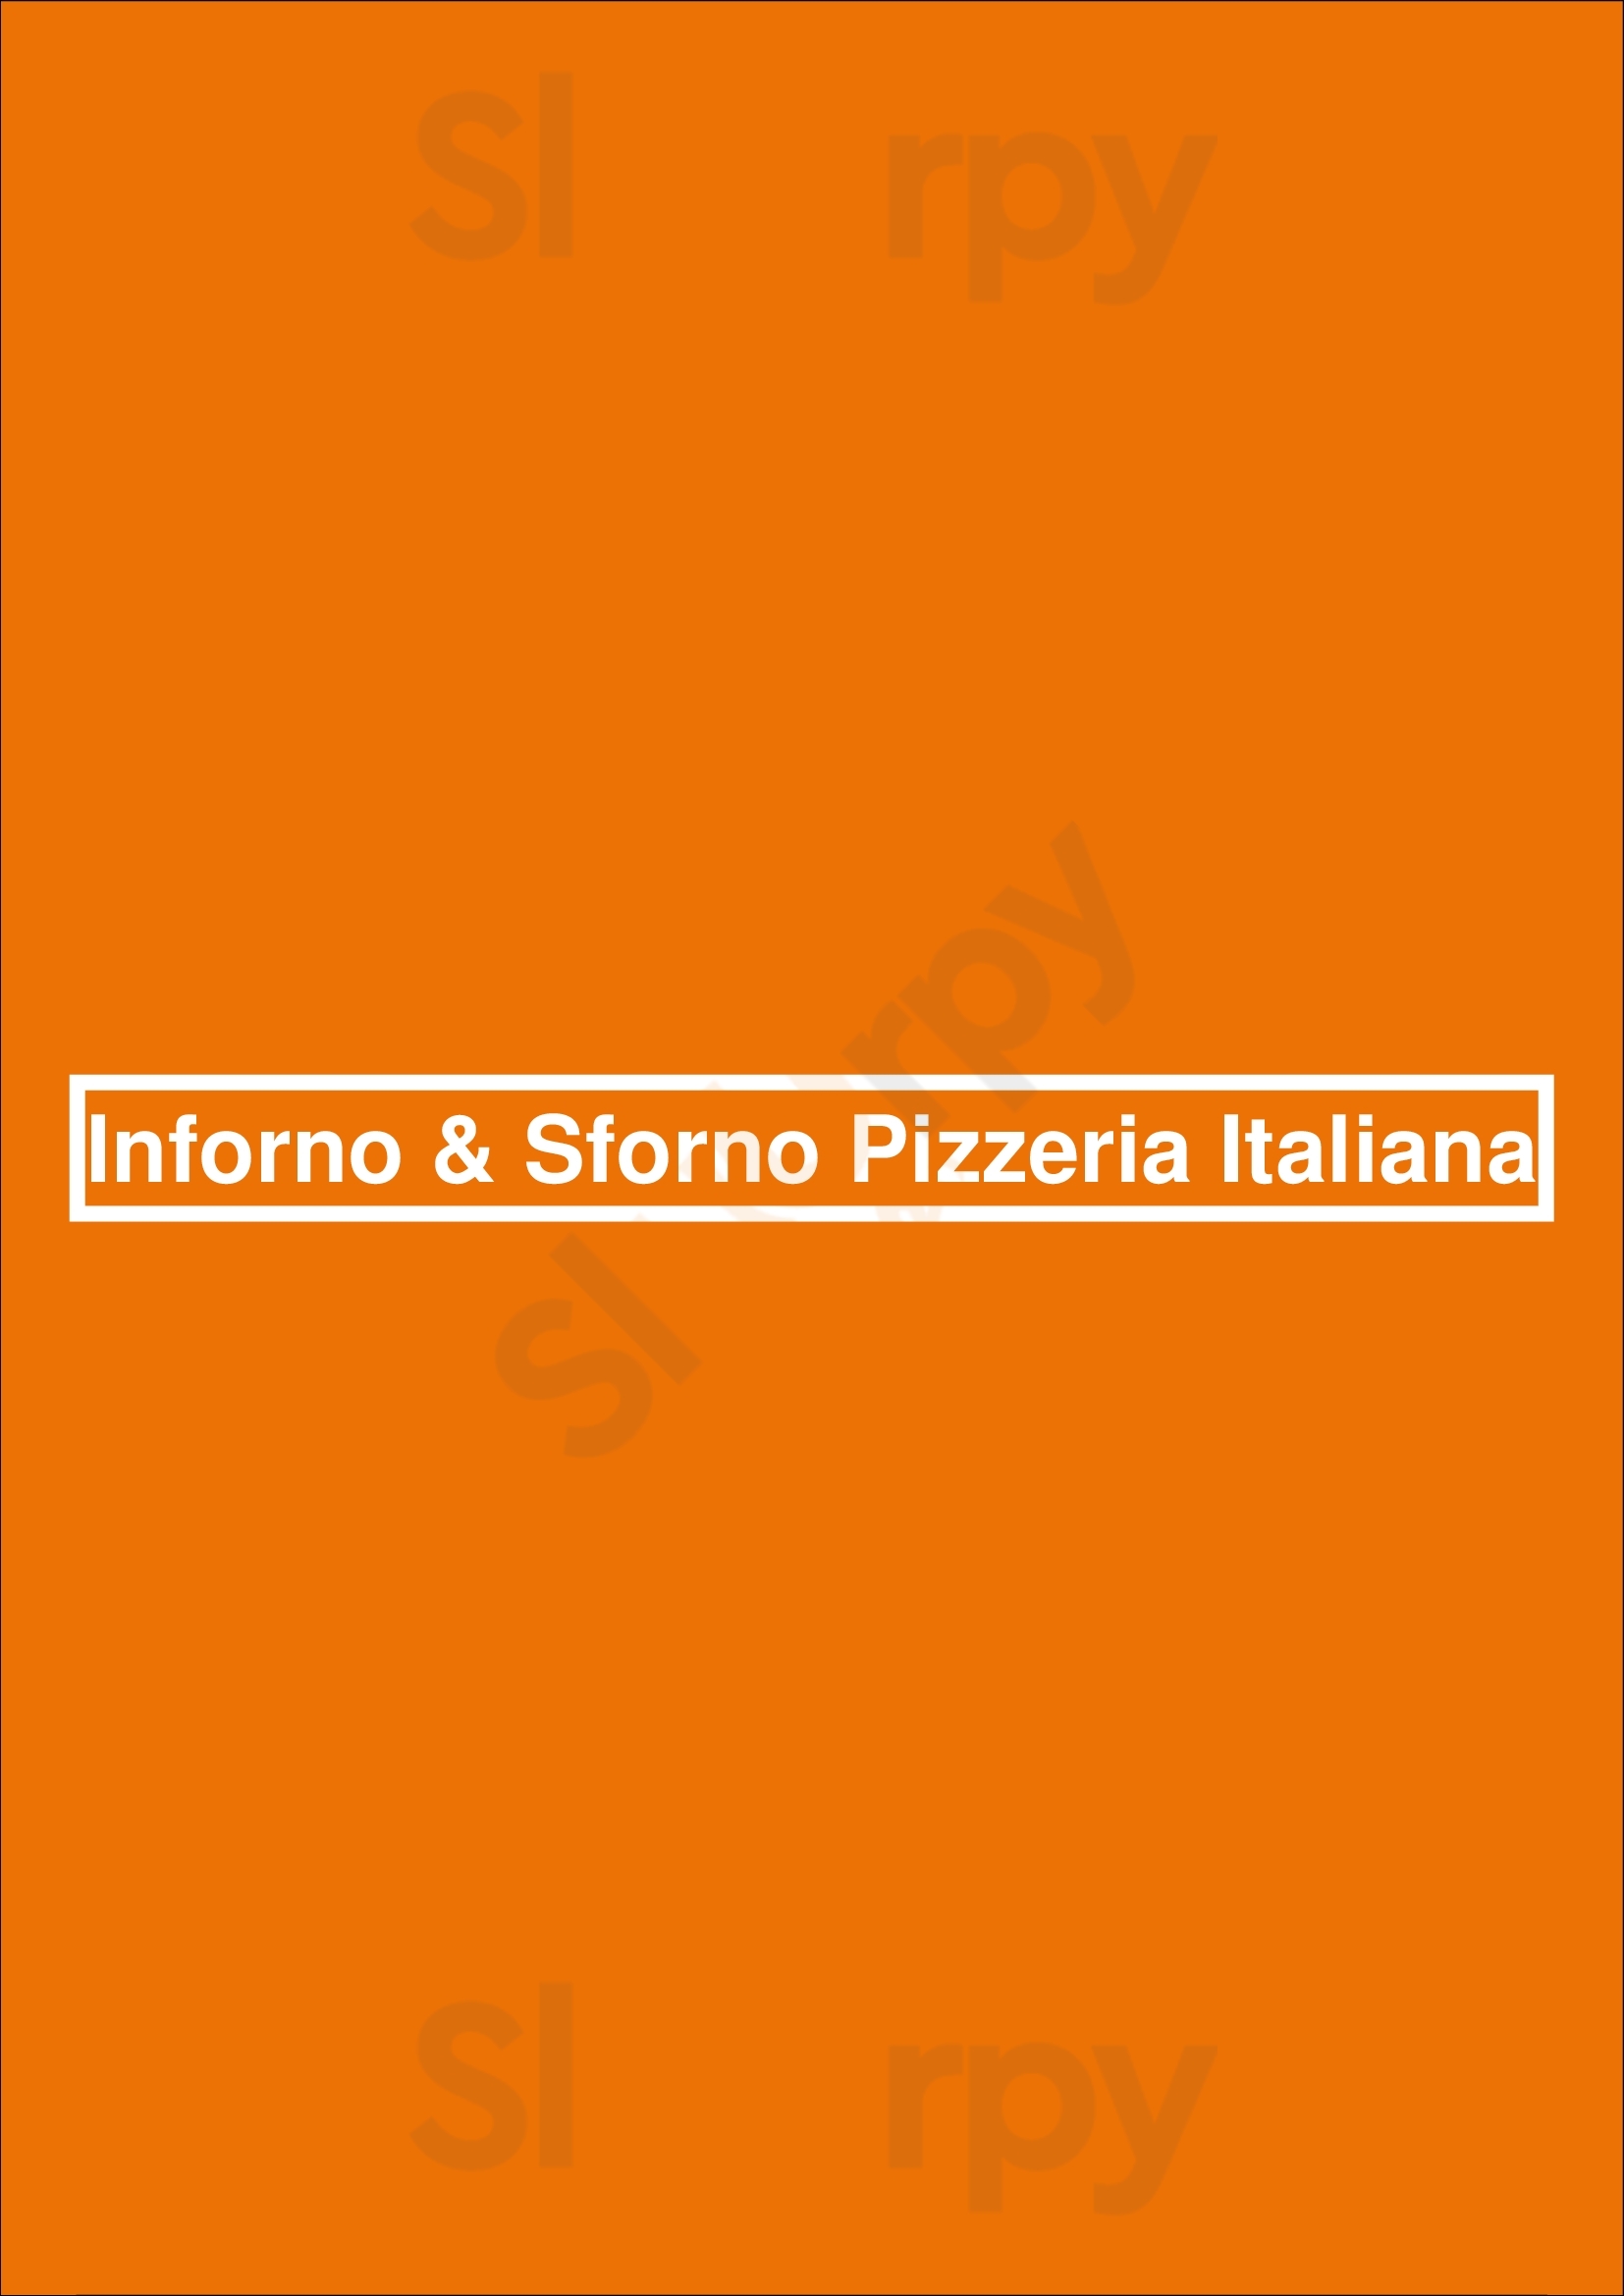 Inforno & Sforno Pizzeria Italiana Carcavelos Menu - 1